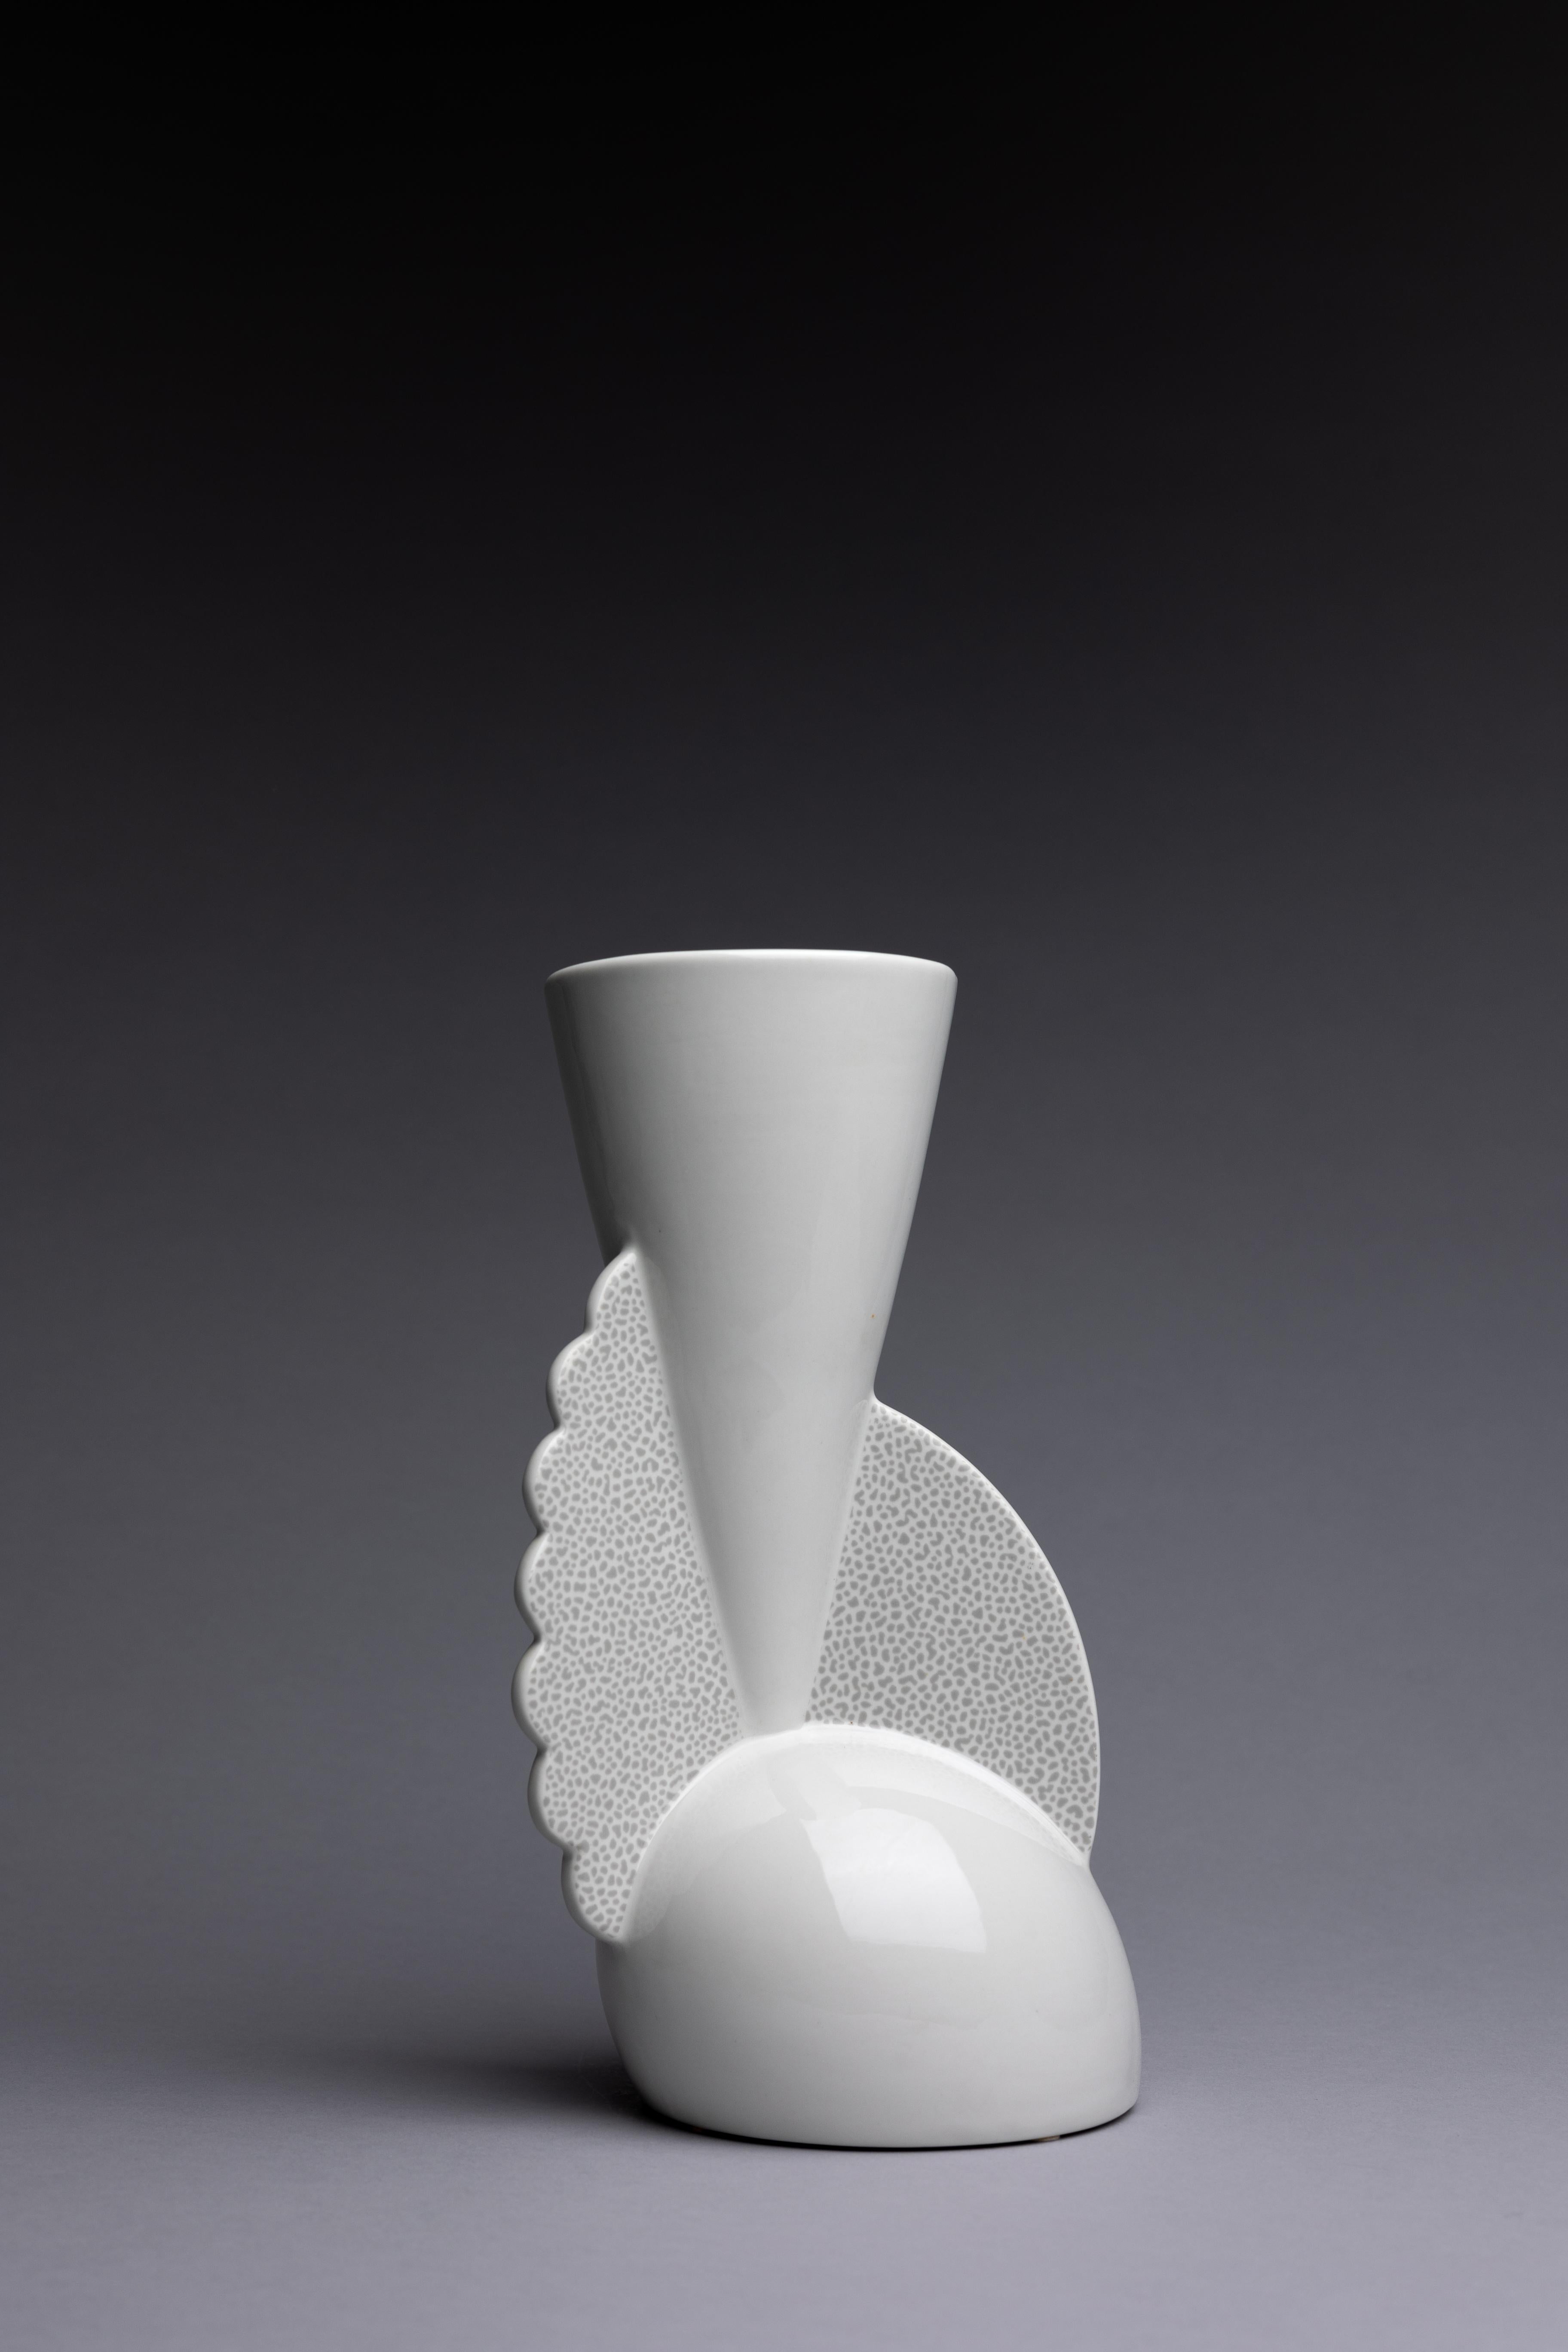 memphis style vase